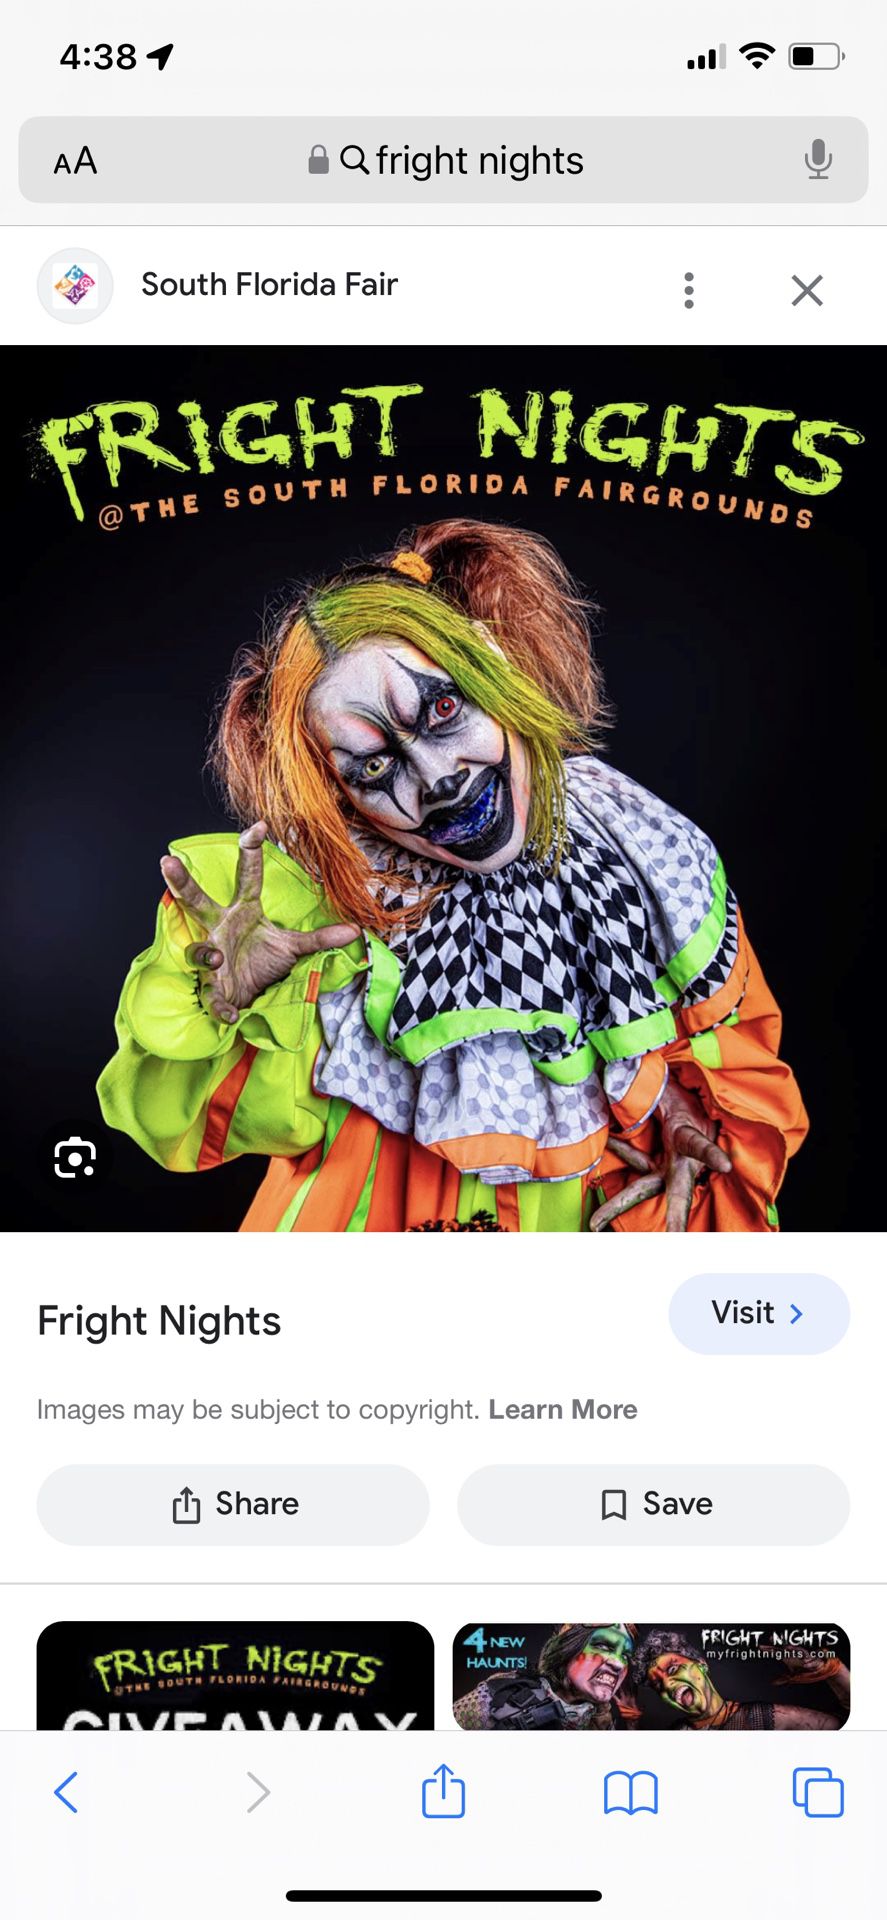 (2) Fright night Tickets  